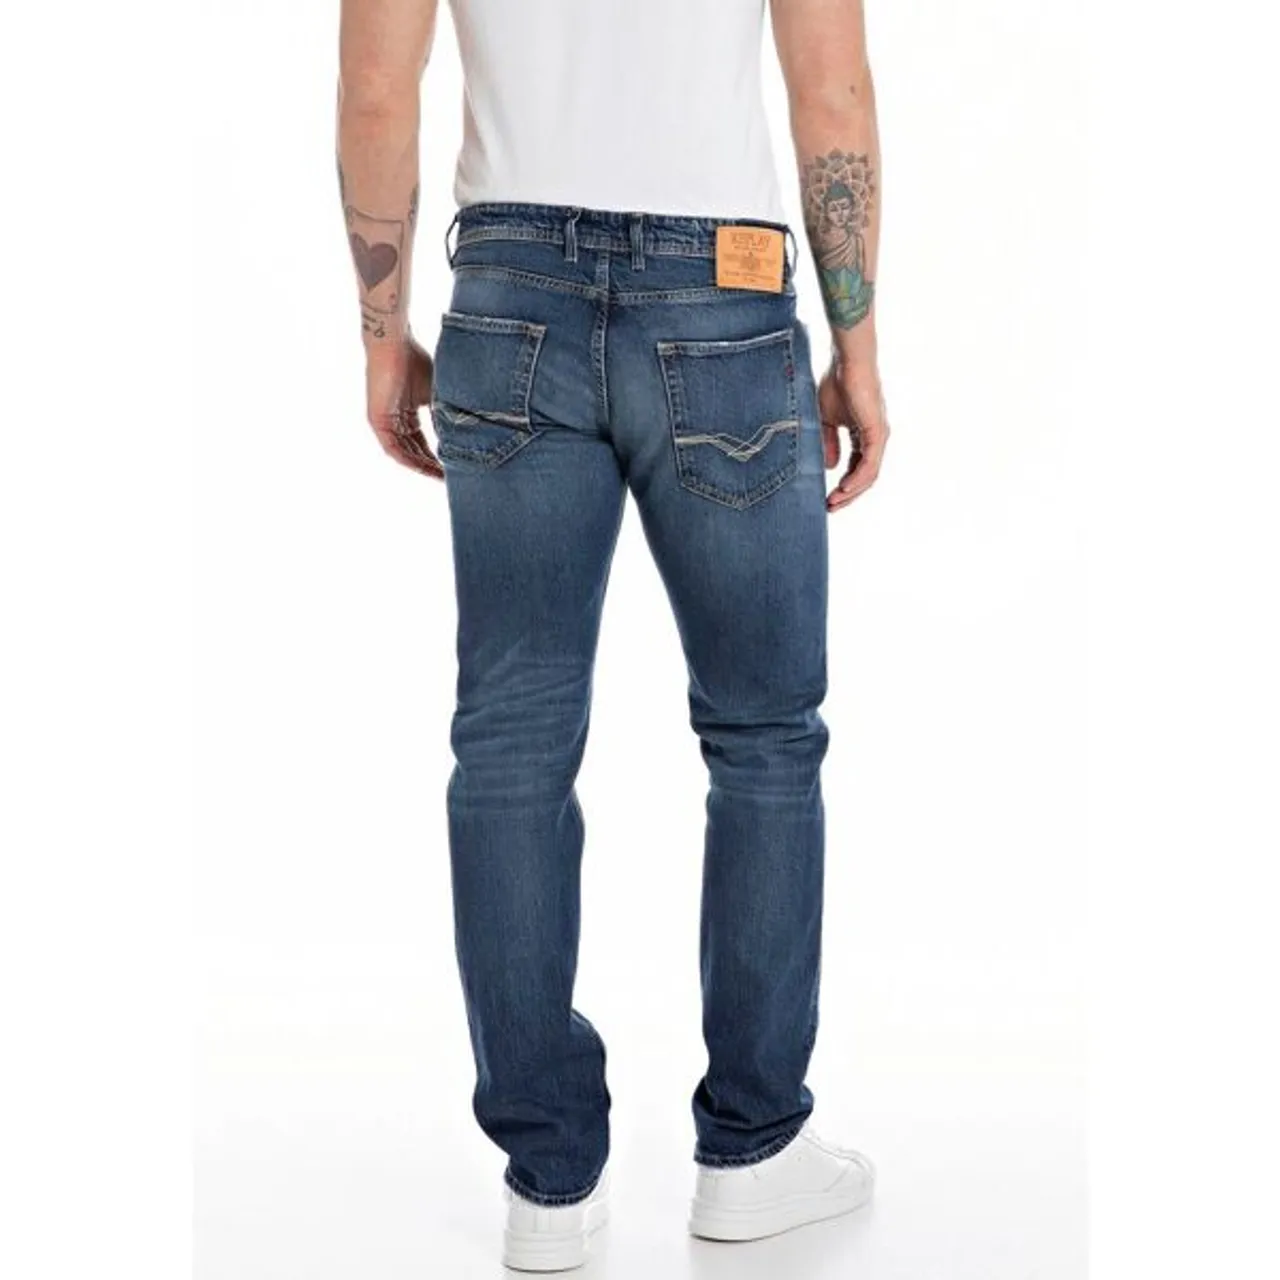 Straight-Jeans REPLAY "GROVER" Gr. 30, Länge 30, blau (blue 612) Herren Jeans Straight Fit